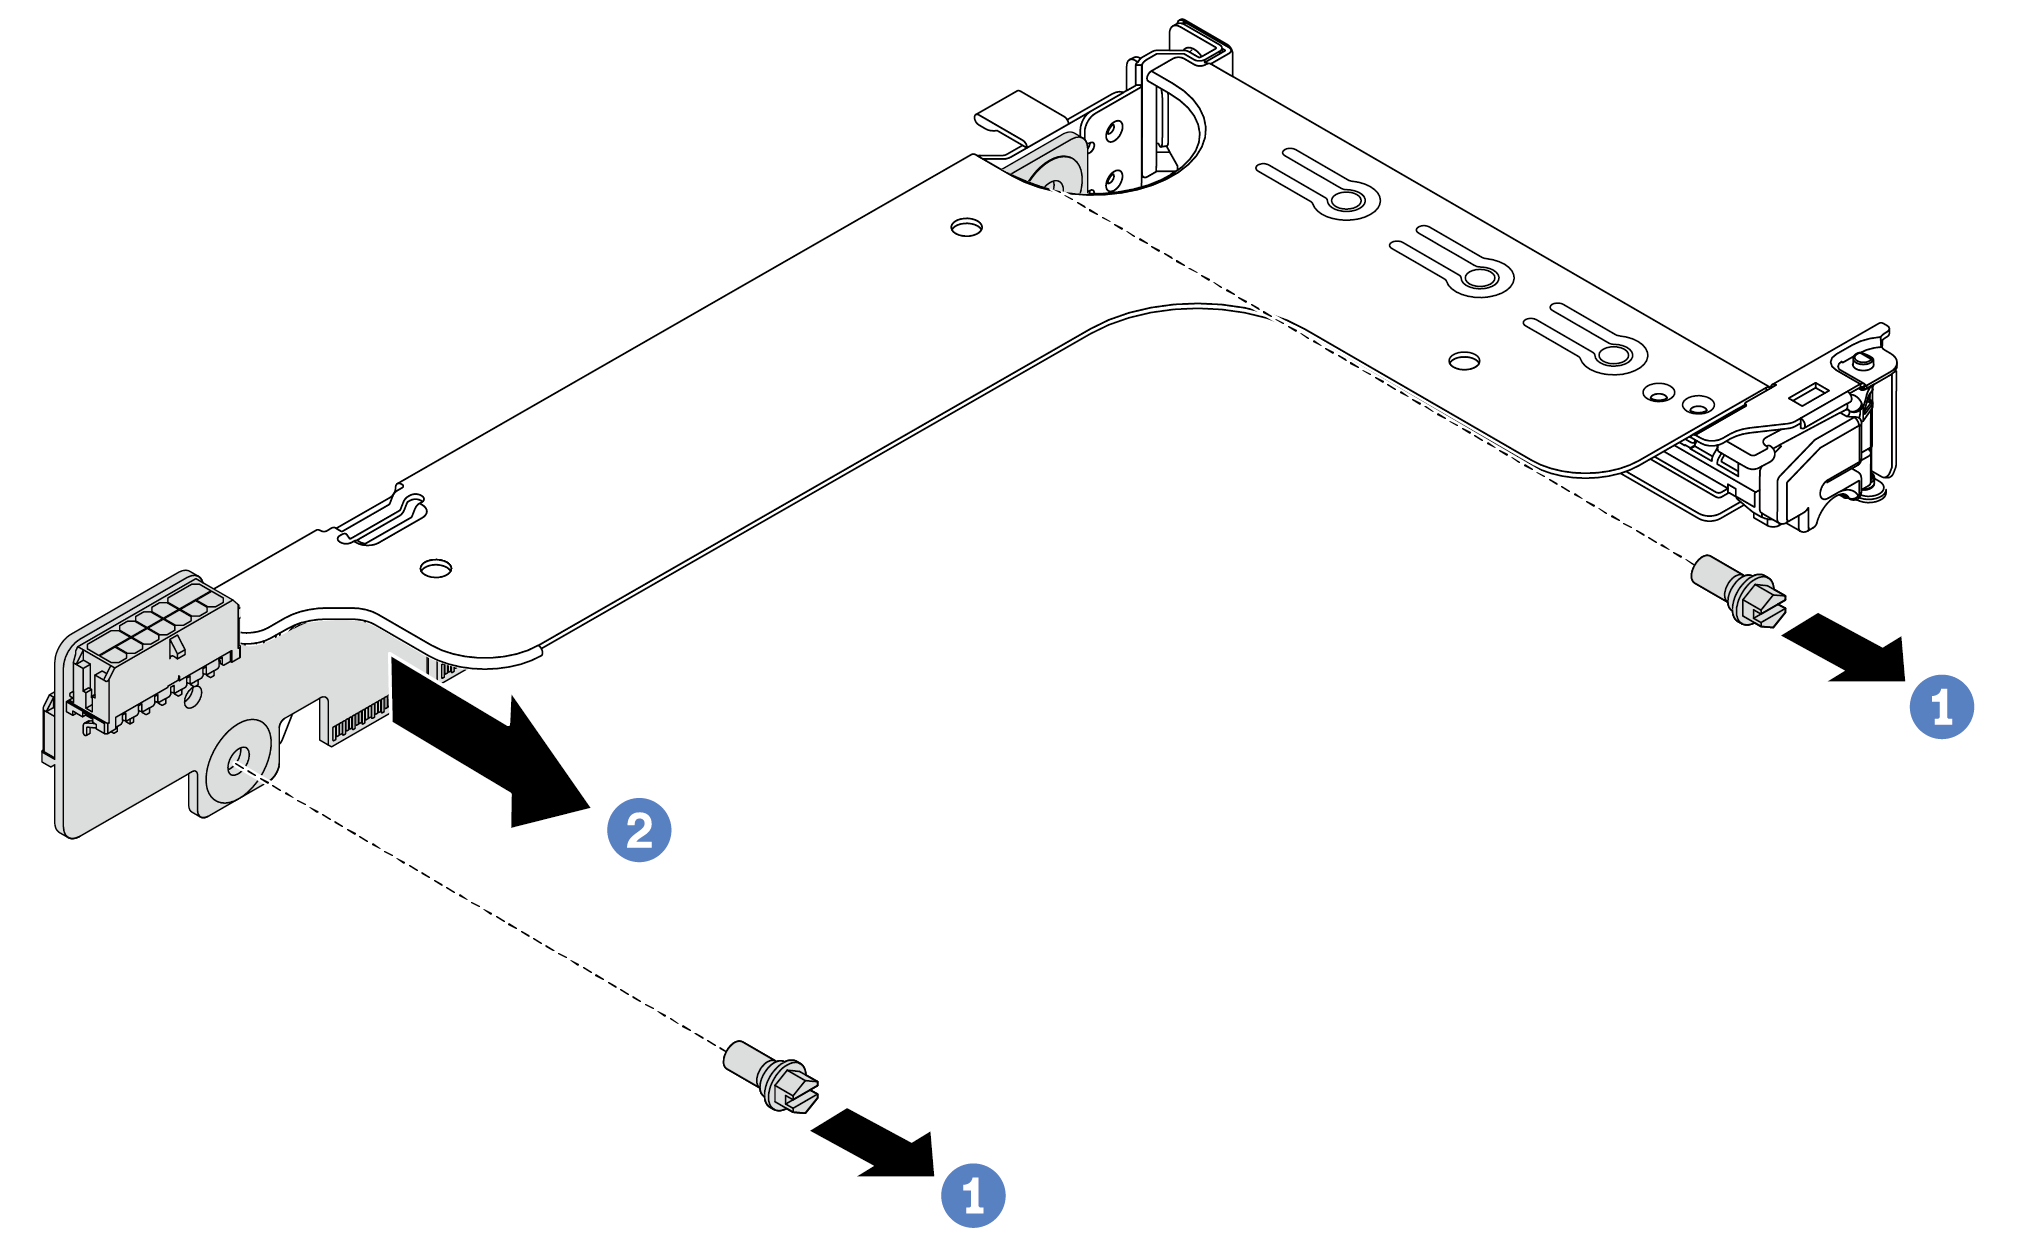 Riser card removal (one-slot or two-slot riser bracket)